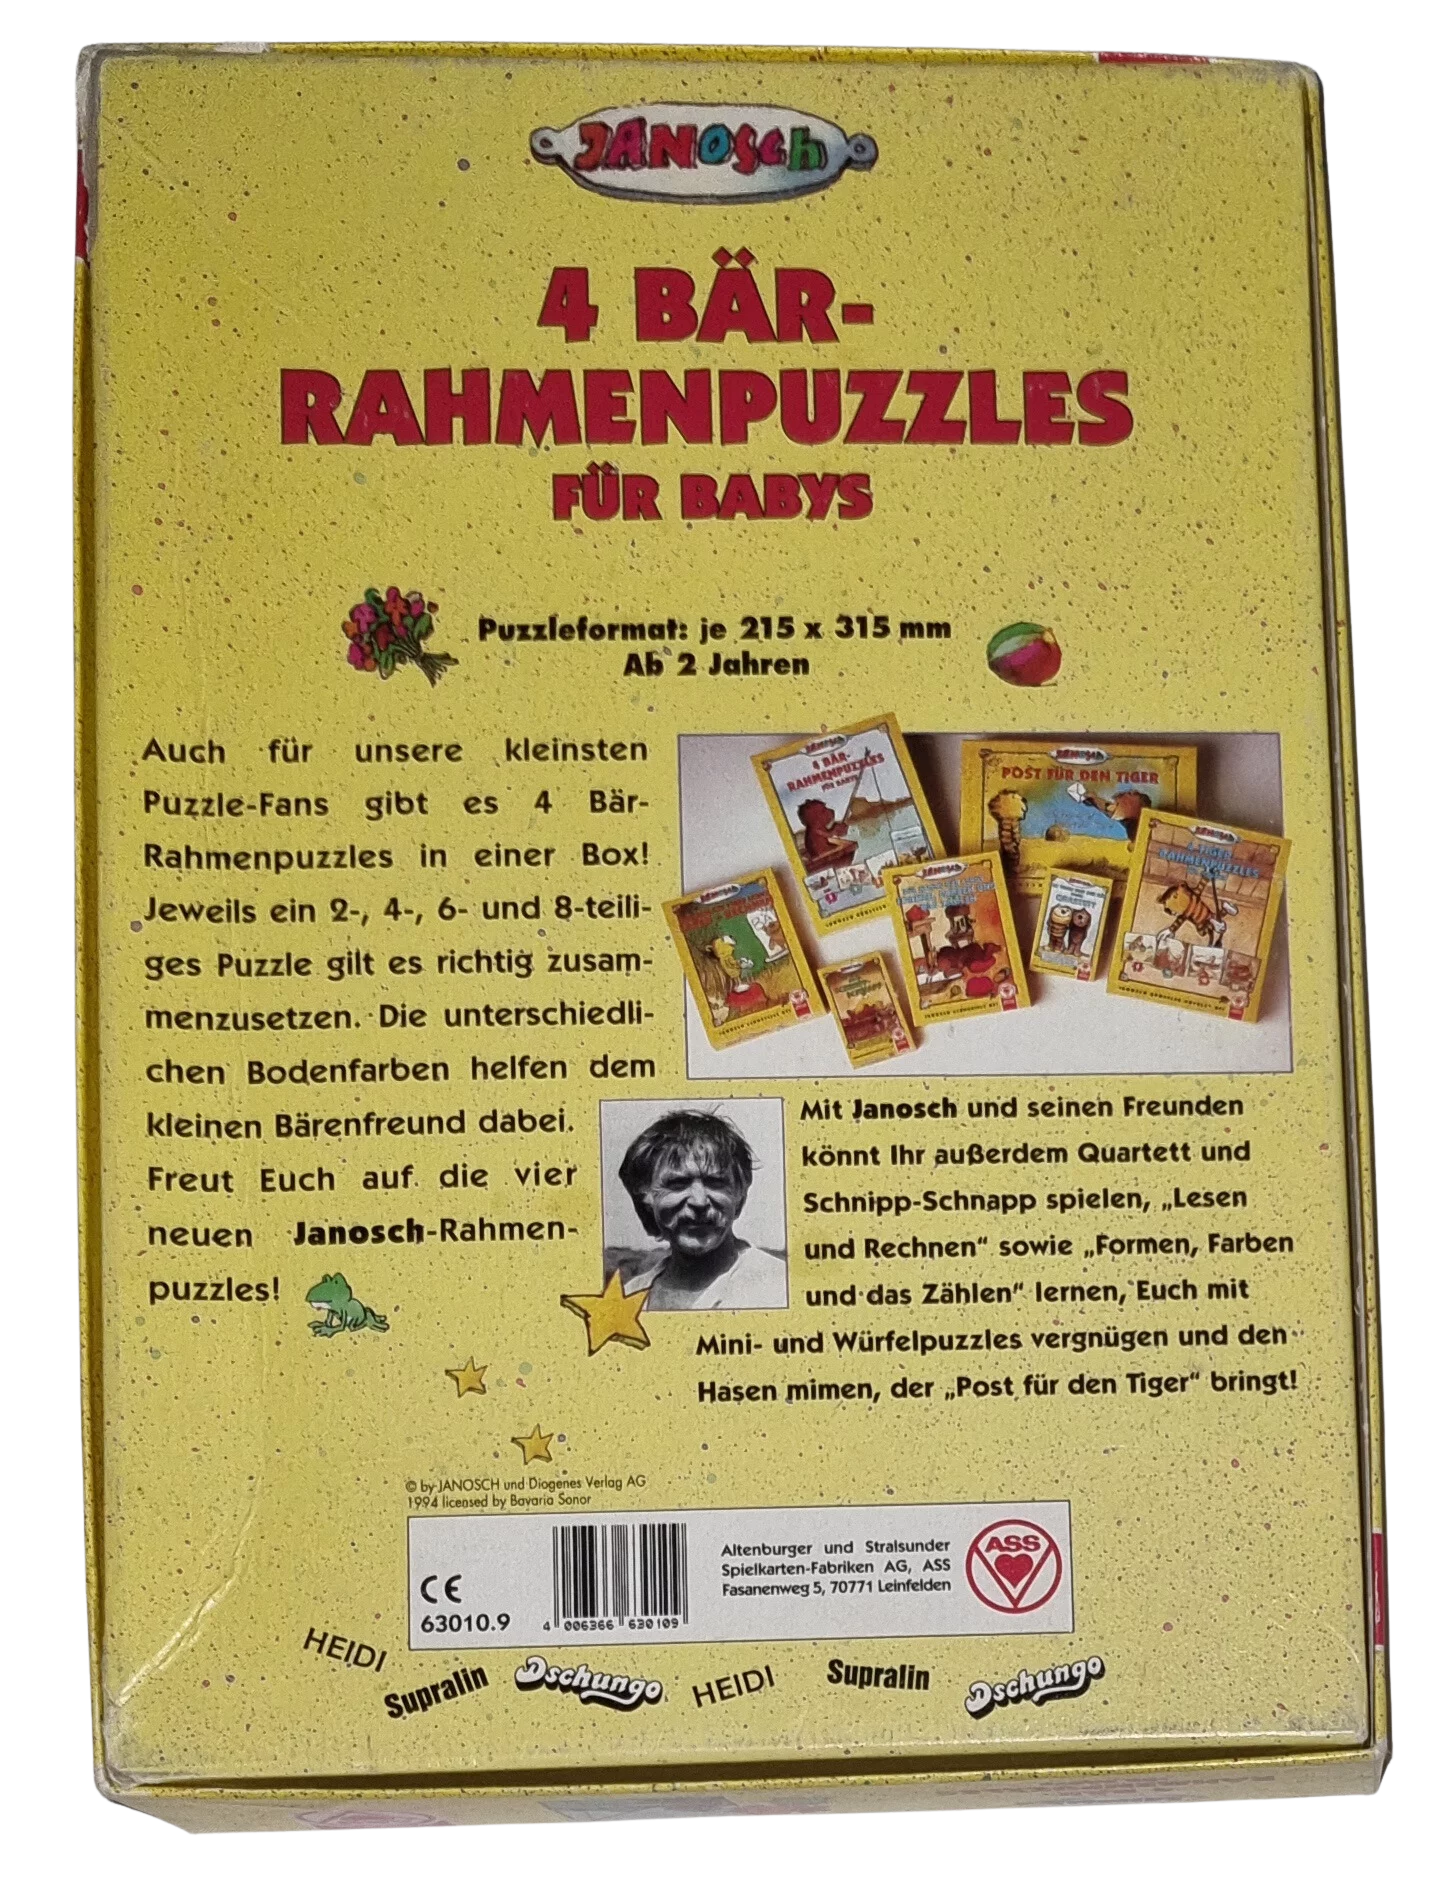 ASS Puzzle 4 Bär-Rahmenpuzzles für Babys Janosch